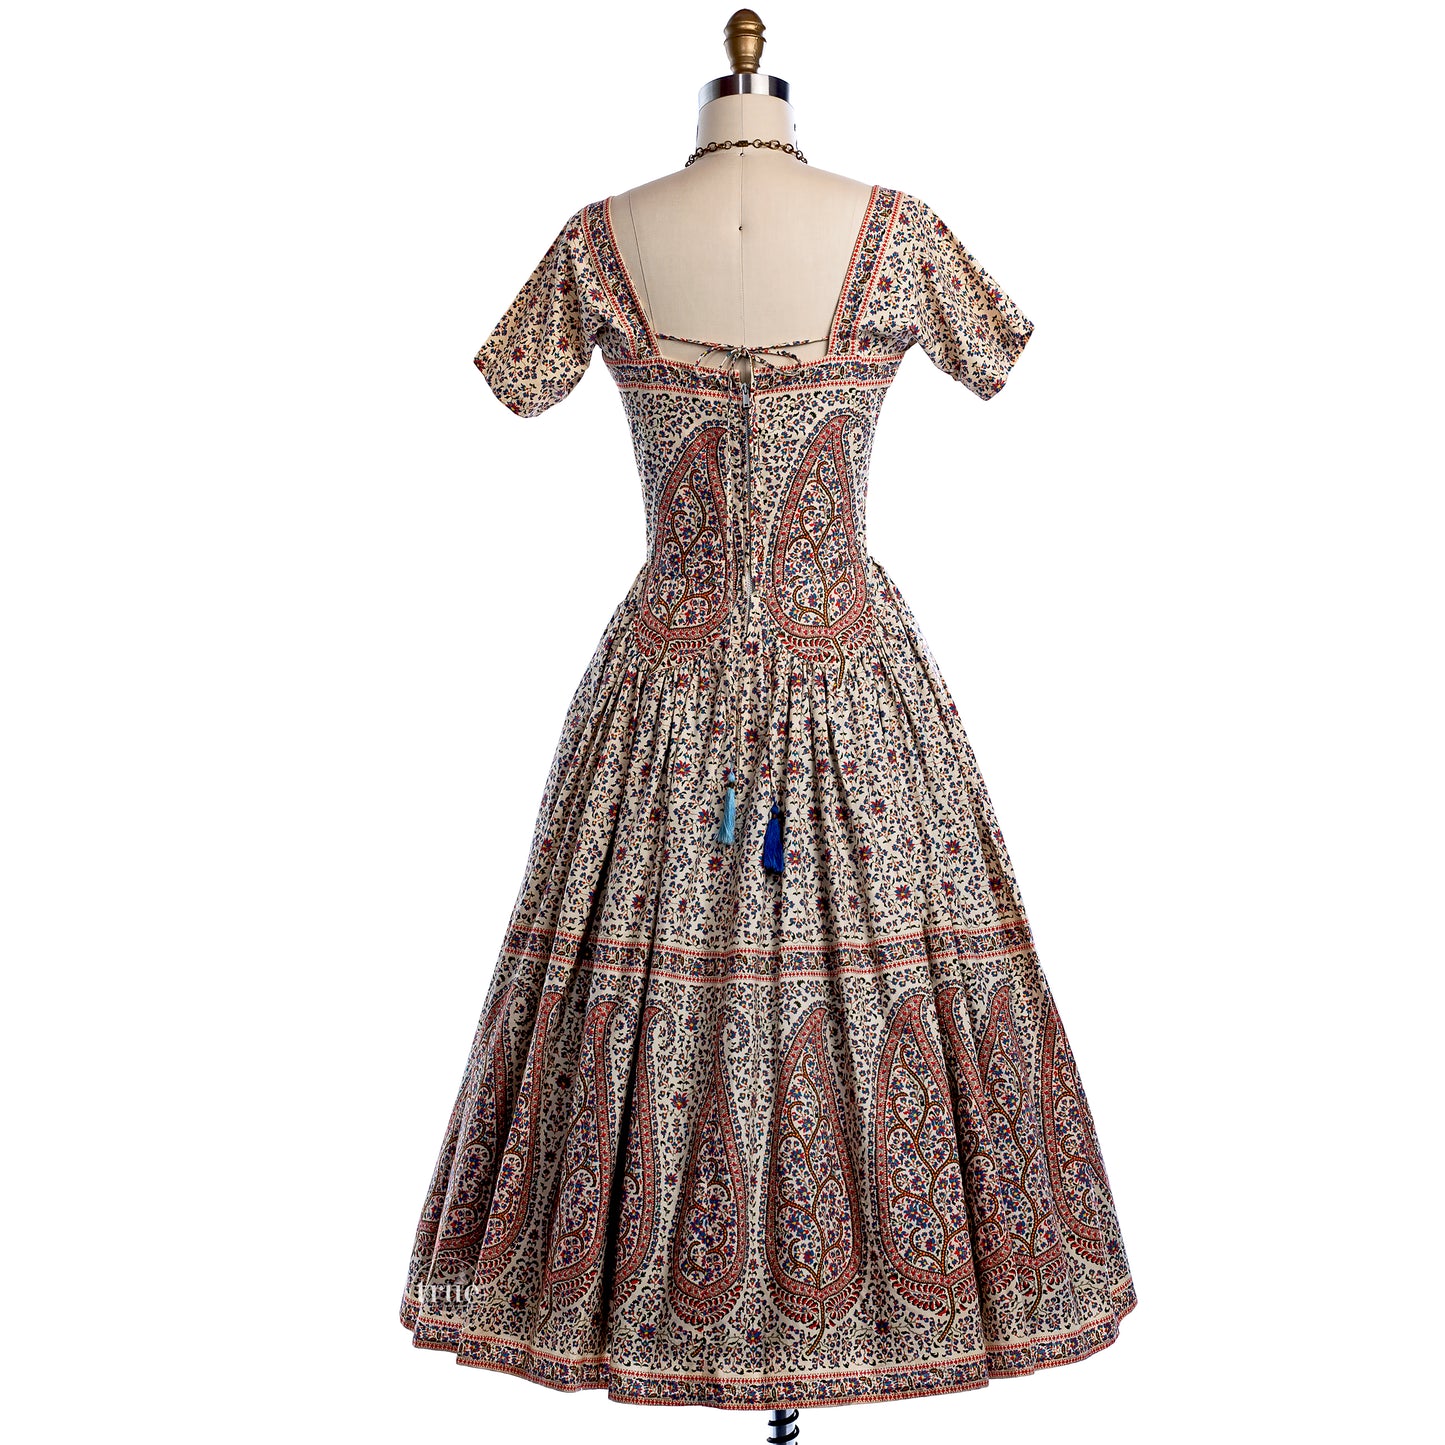 vintage 1950's dress ...rare Tina Leser Original cotton ethnic paisley cutout full skirt dress